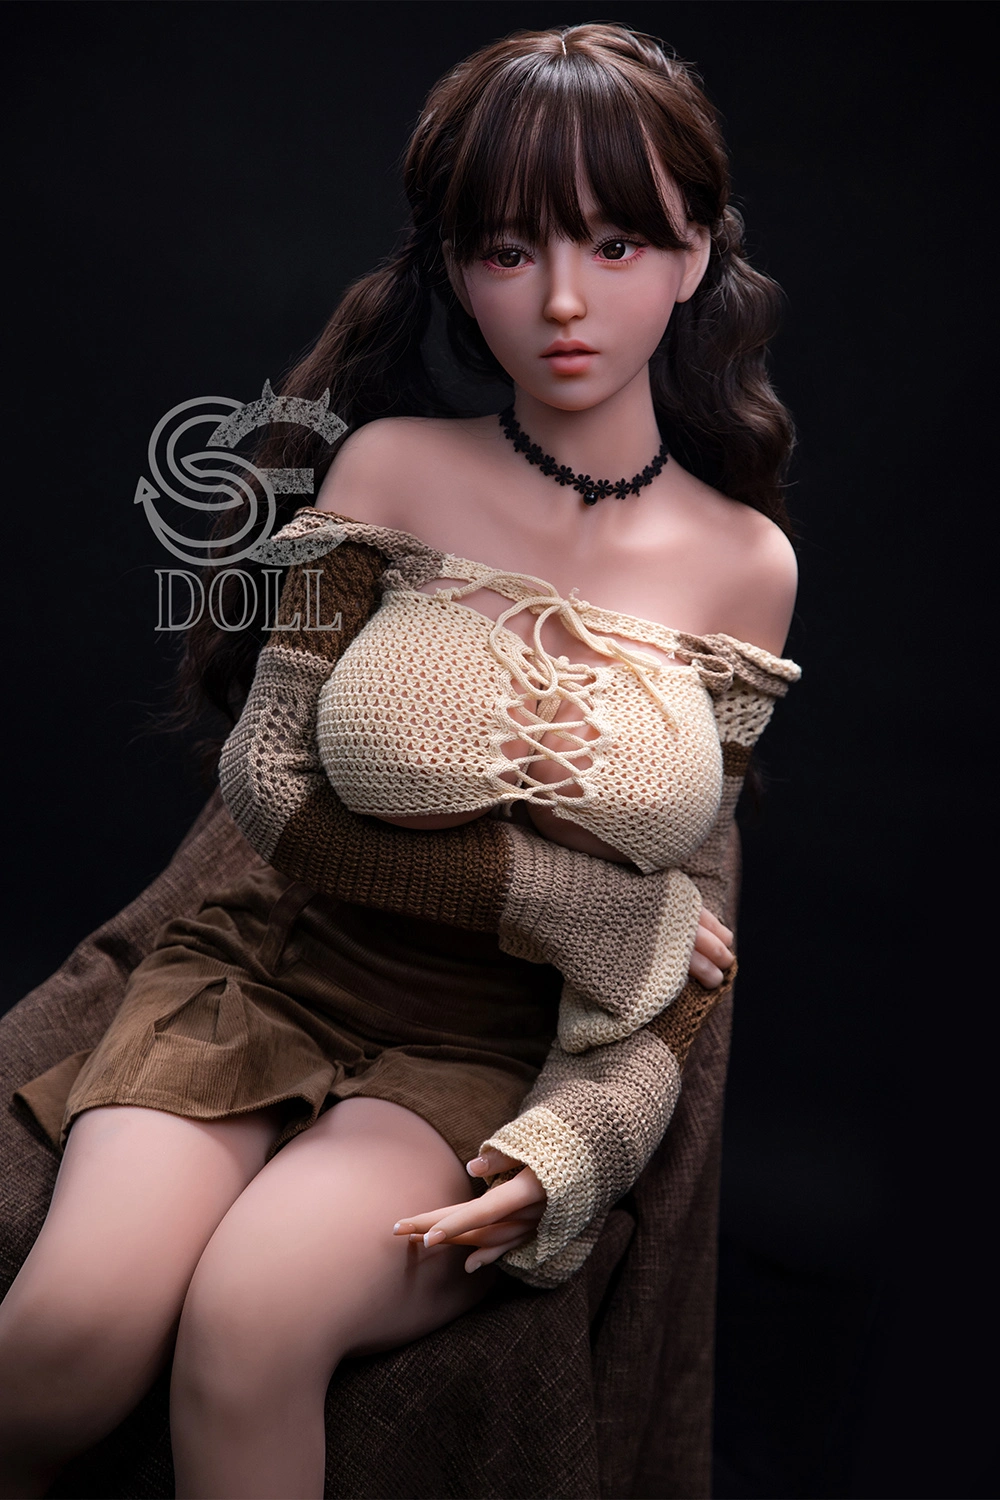 sedoll's latest sex doll